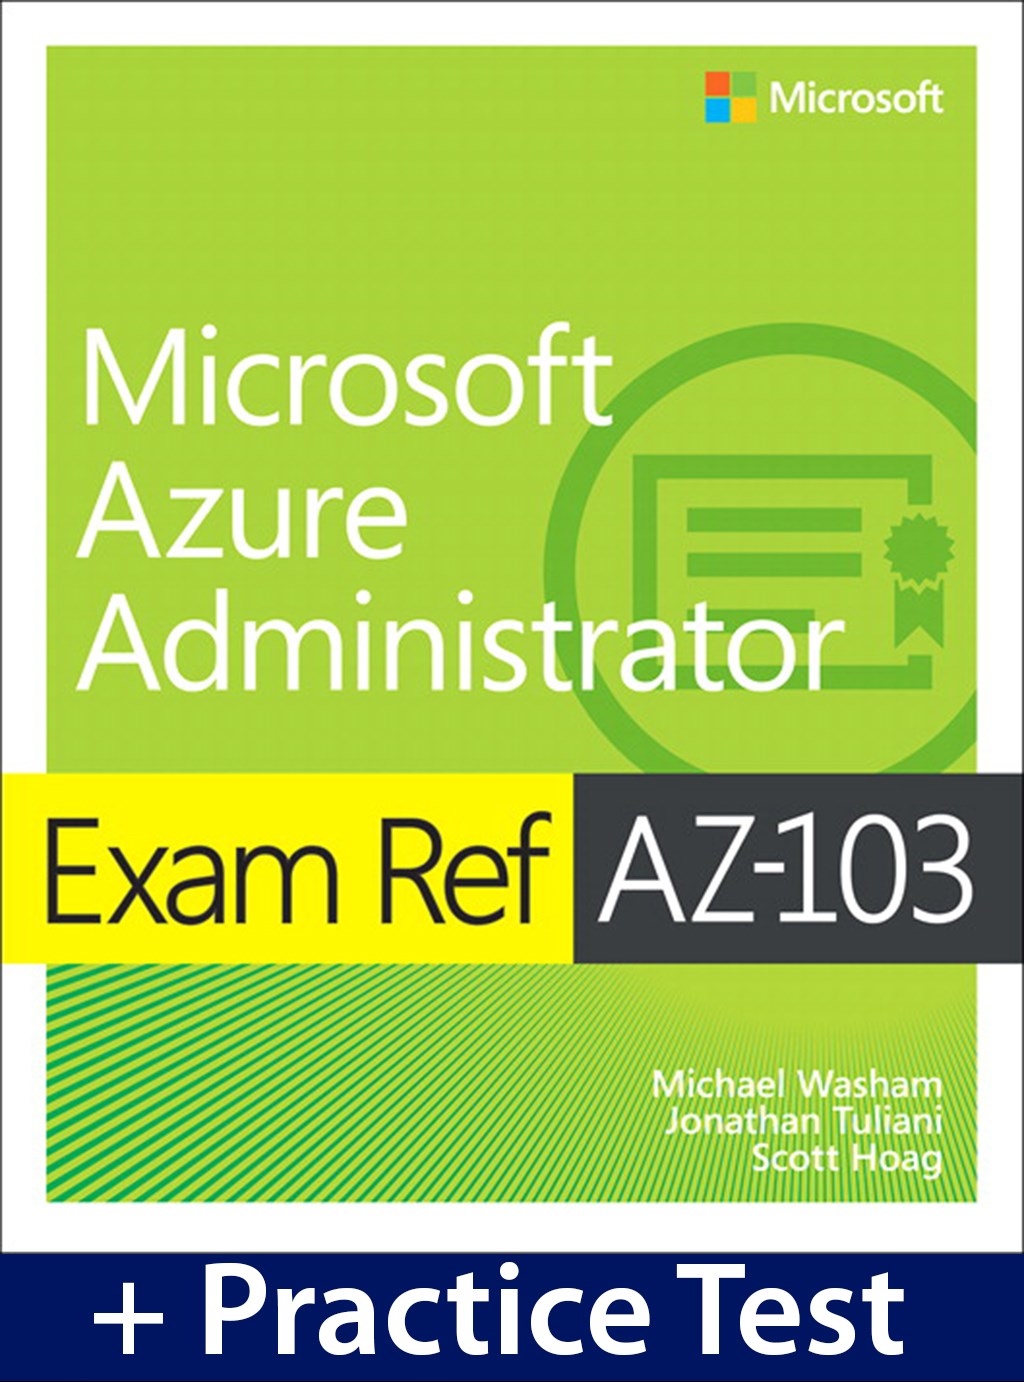 Exam Ref AZ-103 Microsoft Azure Administrator with Practice Test